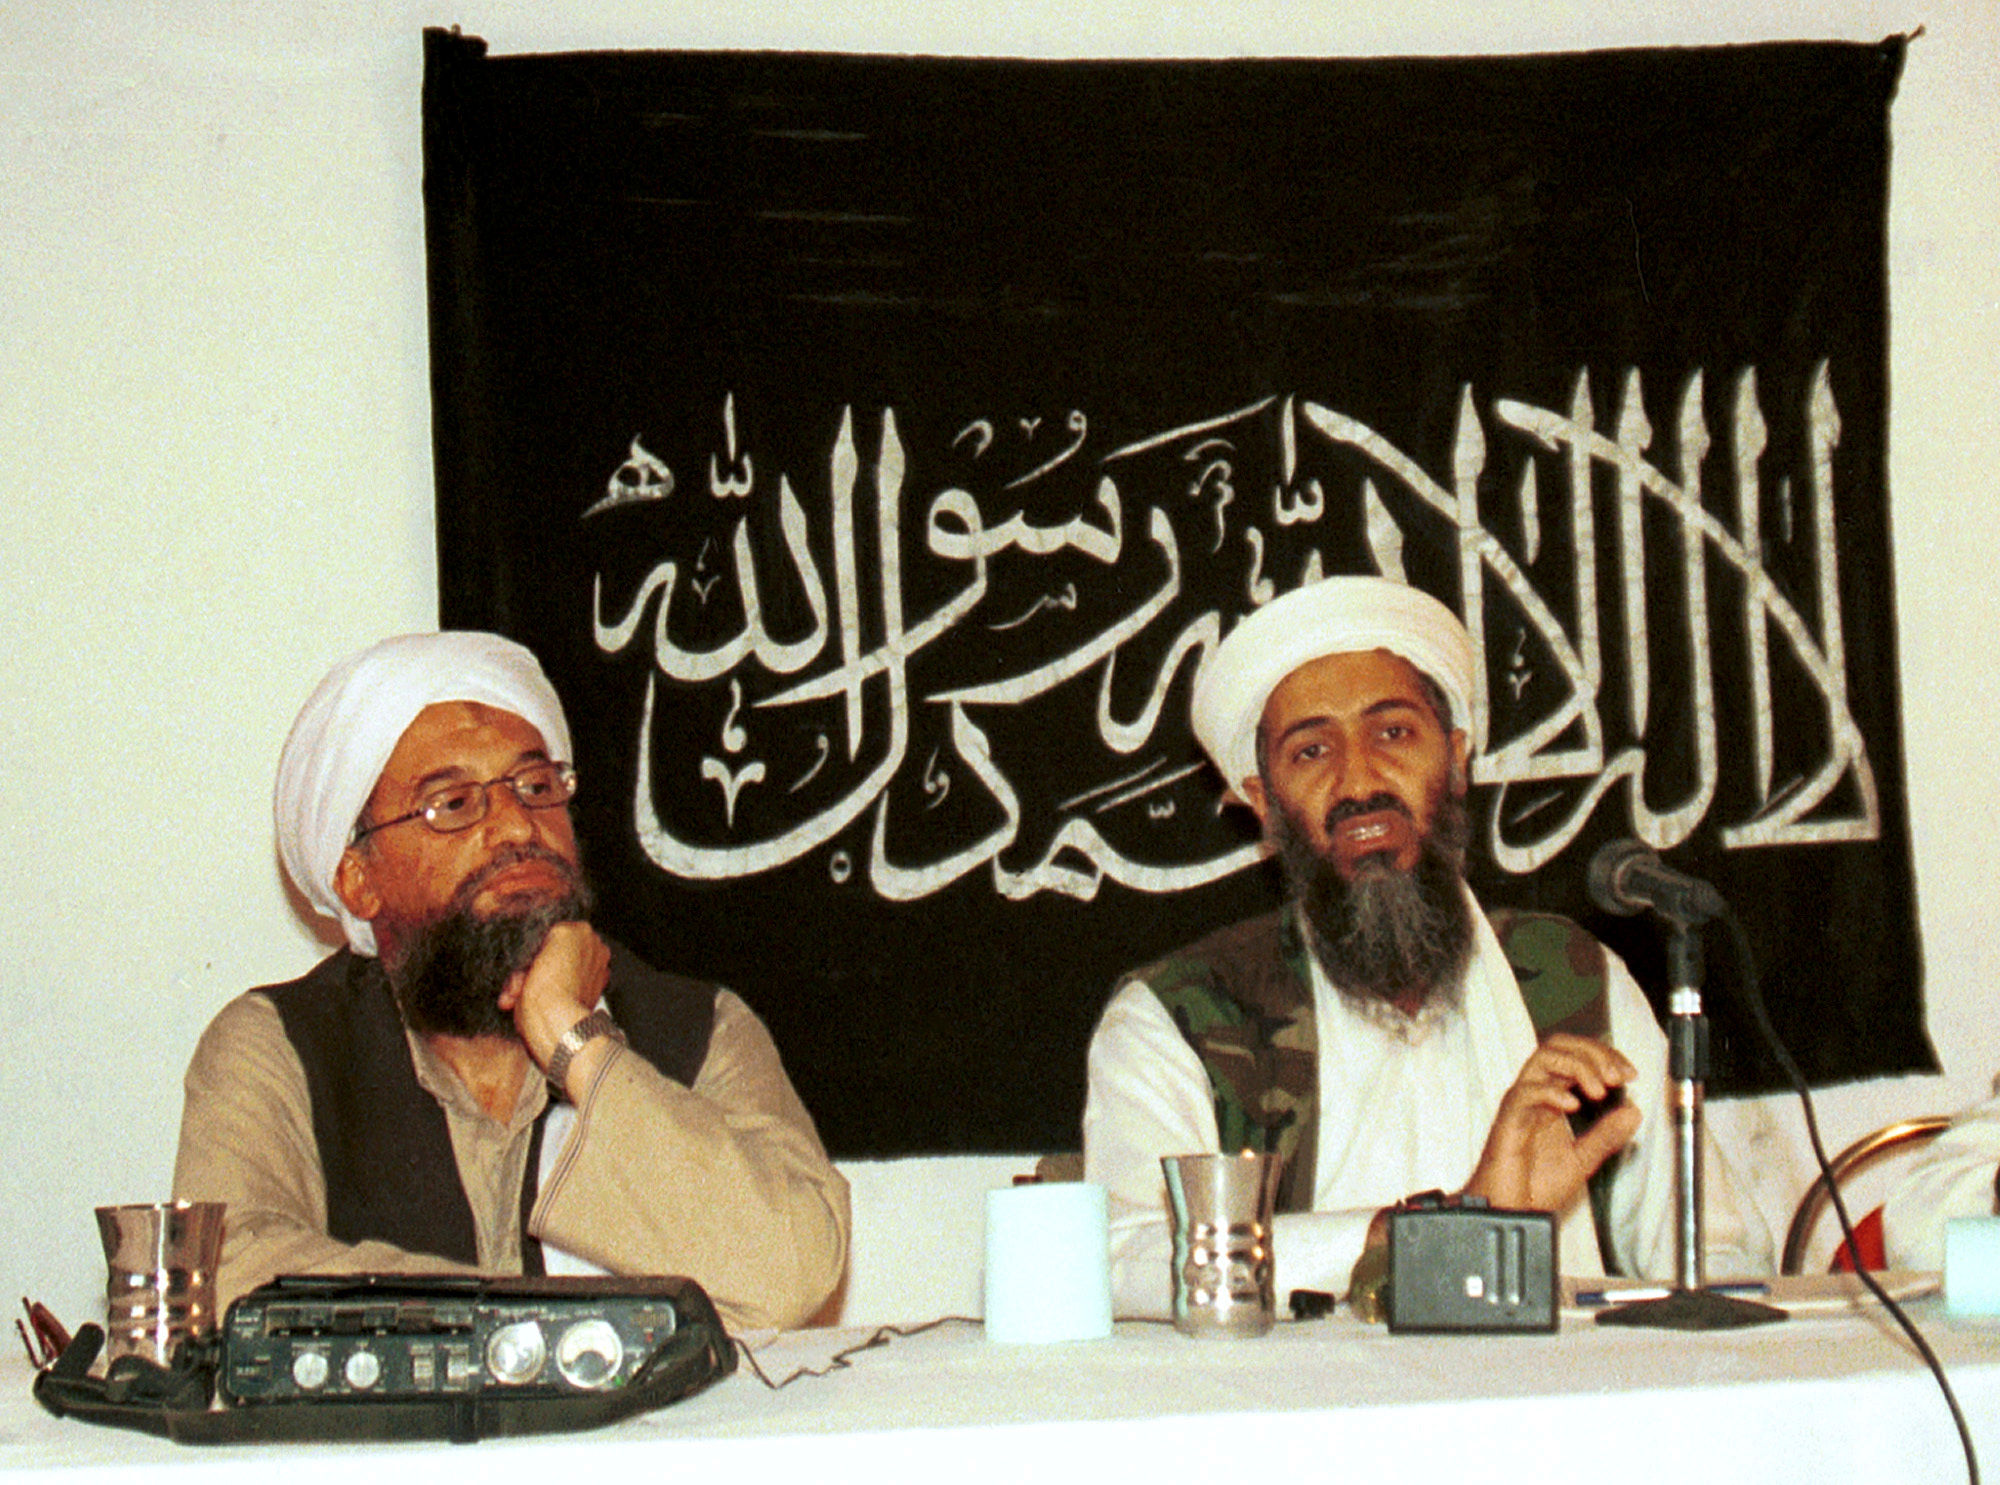 Who was Osama Bin Laden?